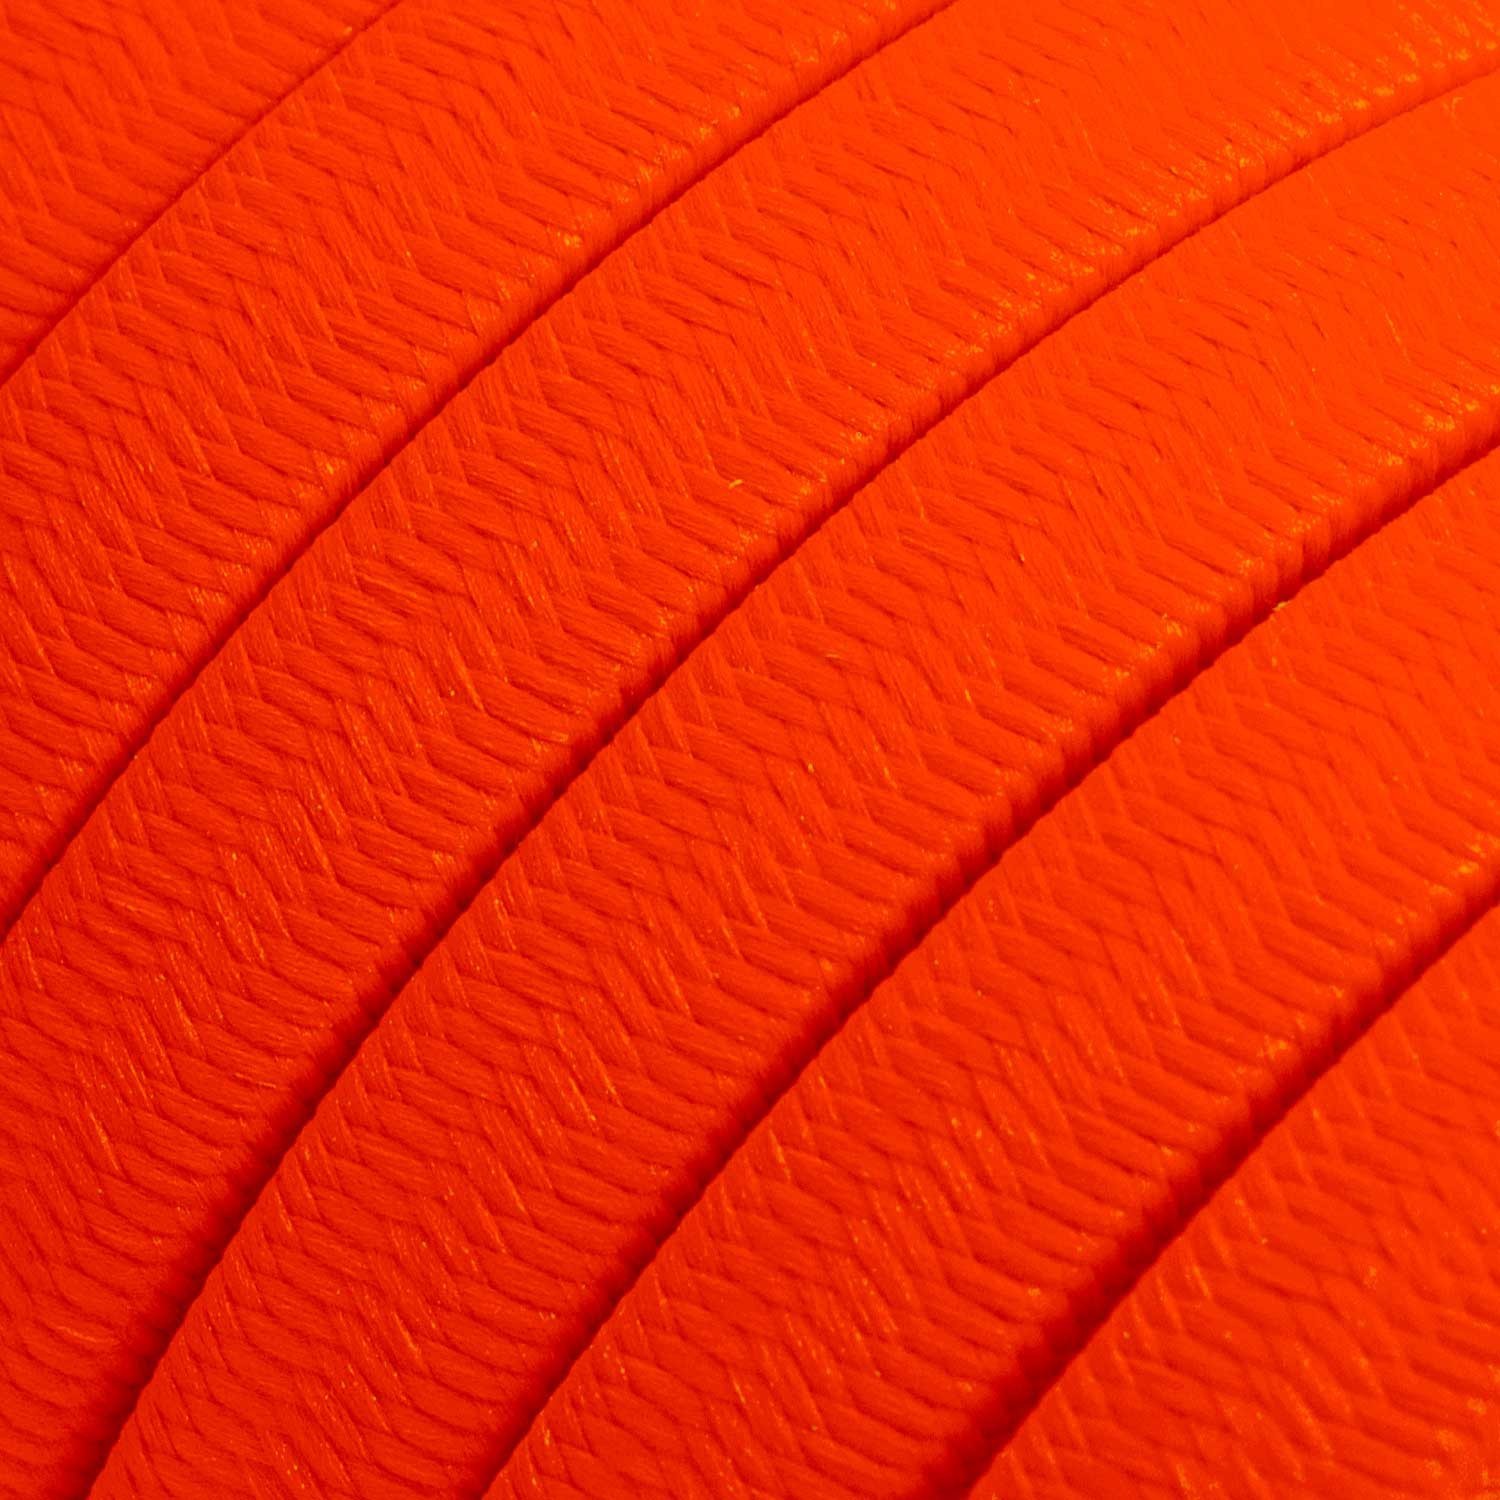 Tekstilni električni kabel za Svjetlosni lanac prekriven CF15 Fluo narančastim tekstilom